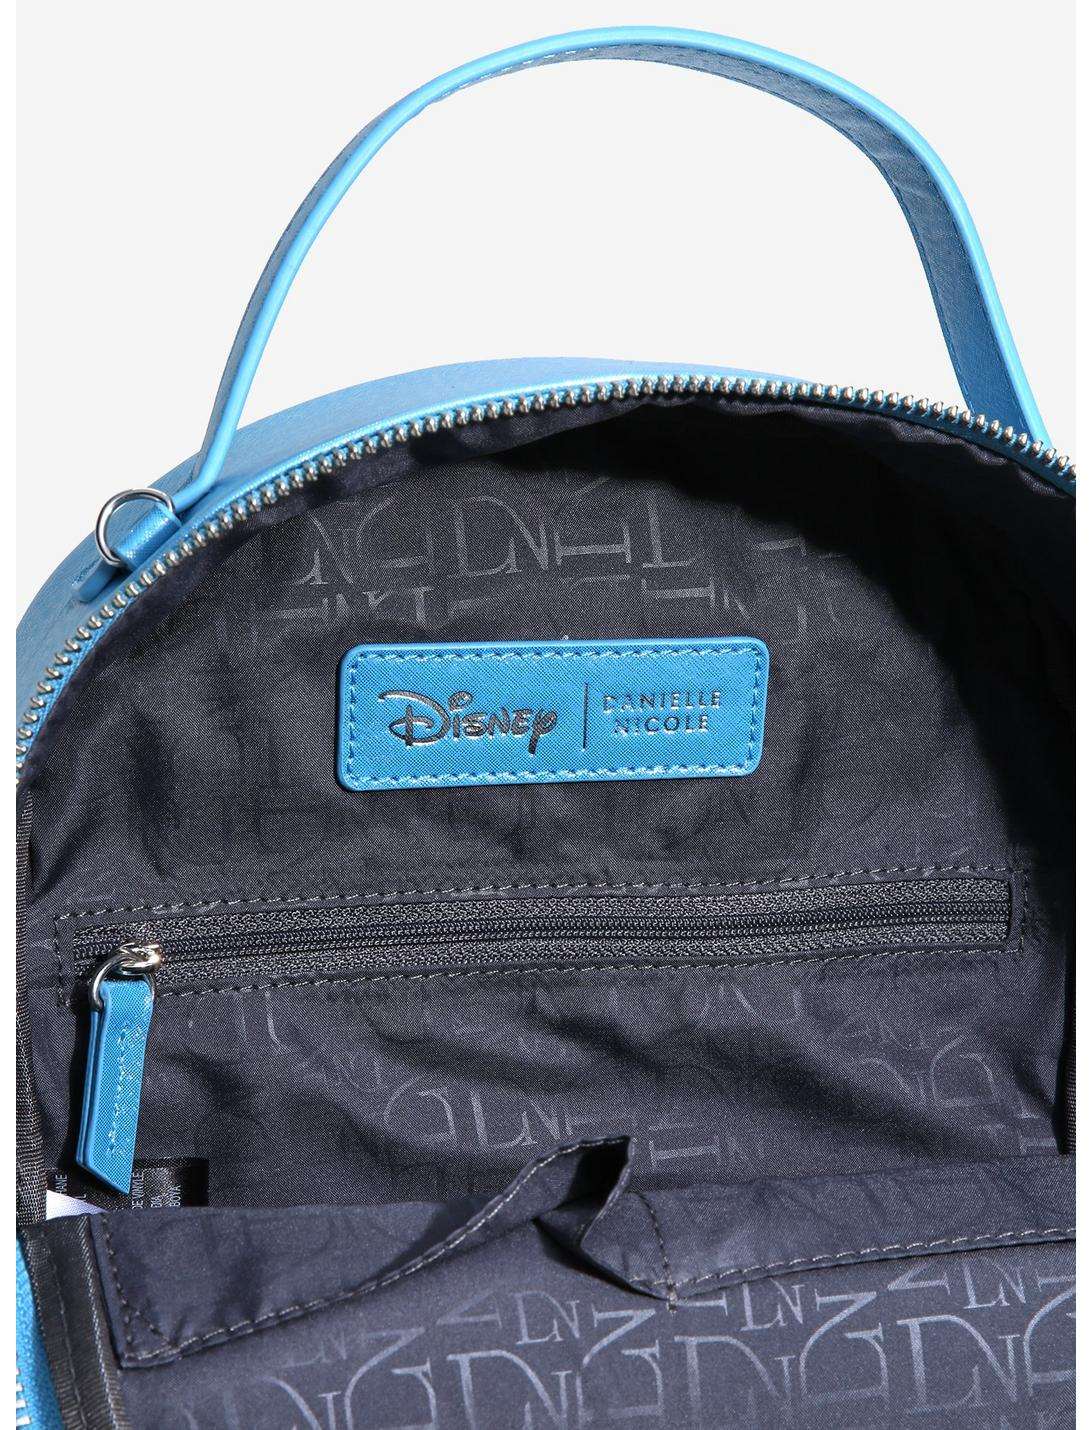 Danielle Nicole Disney Cinderella Night Time Castle Portrait Mini Backpack